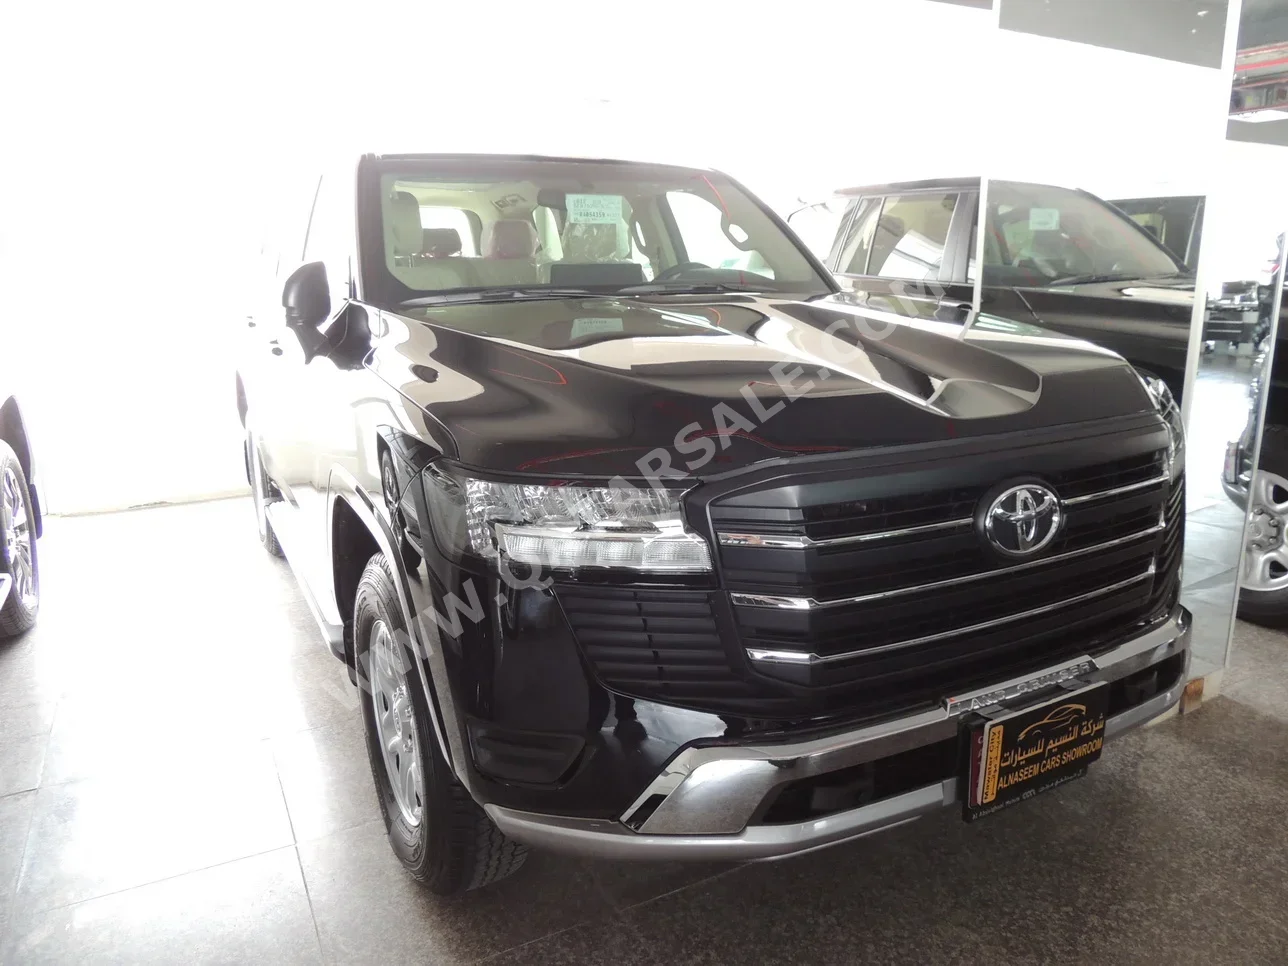 Toyota  Land Cruiser  GX  2024  Automatic  5,000 Km  6 Cylinder  Four Wheel Drive (4WD)  SUV  Black  With Warranty